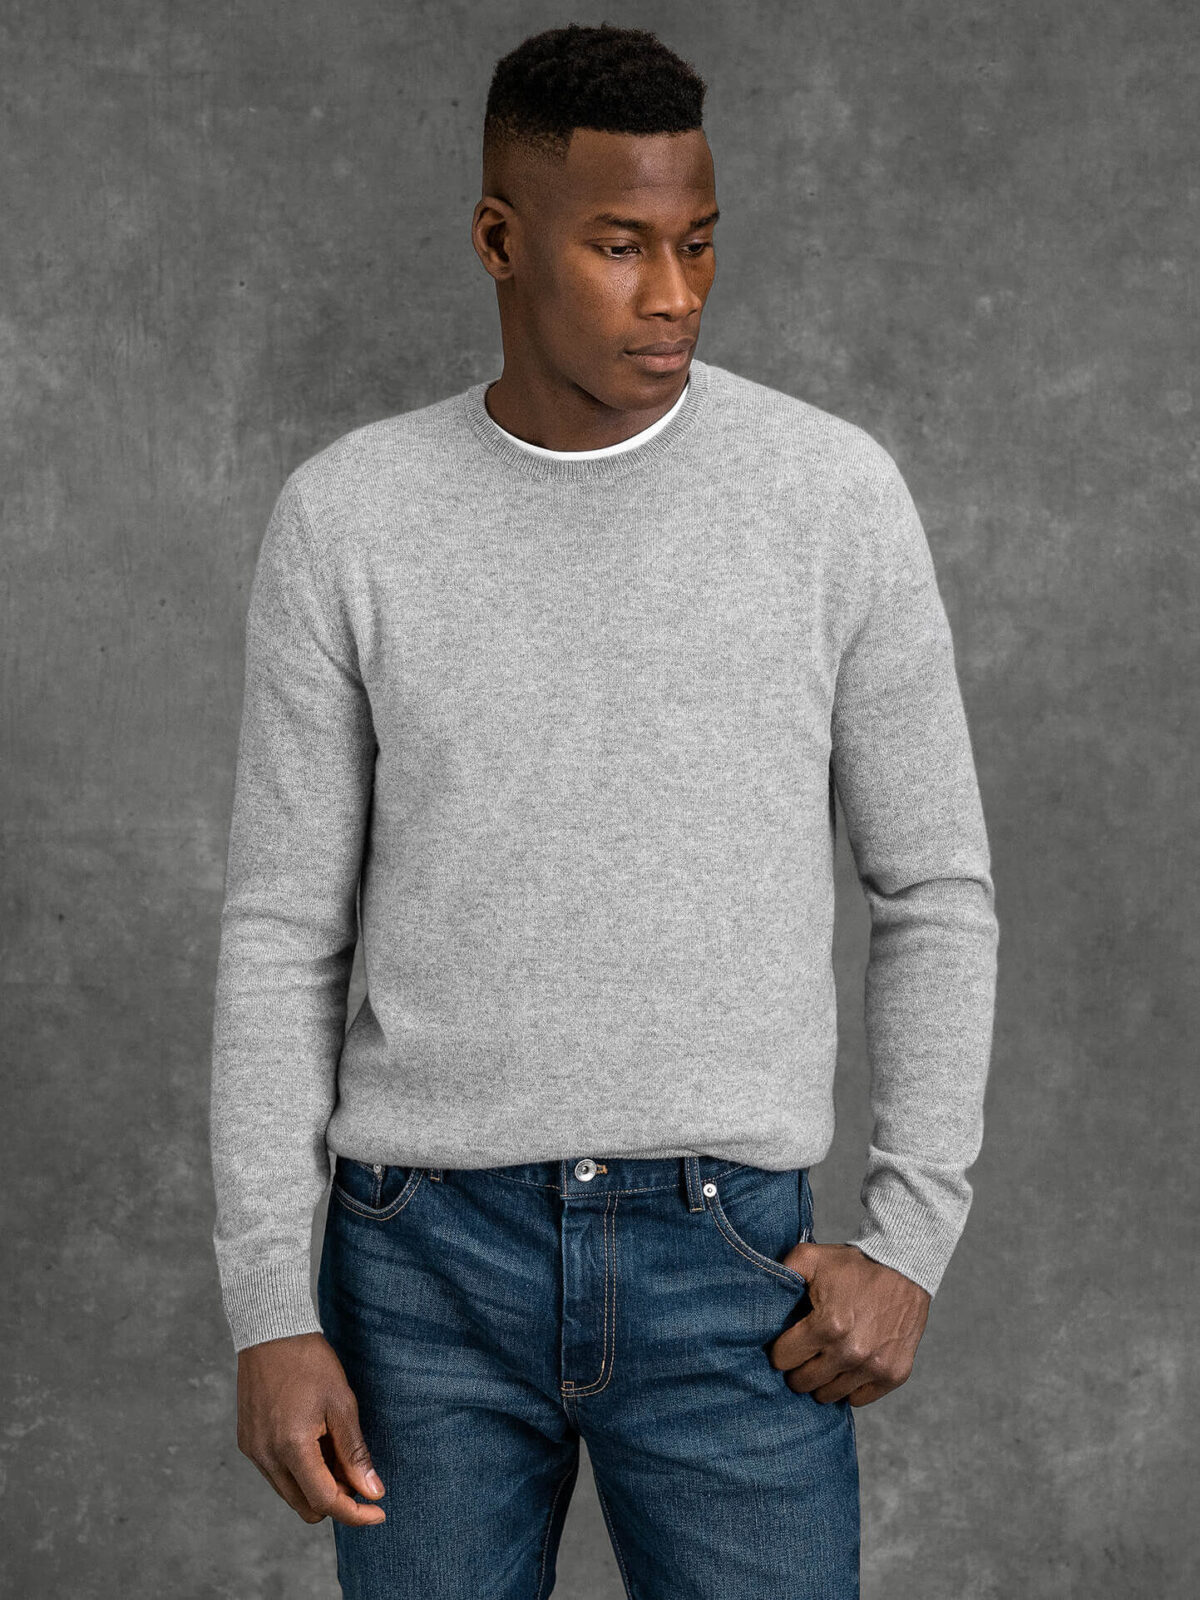 Short sleeve jumper 100% Cashmere in light grey